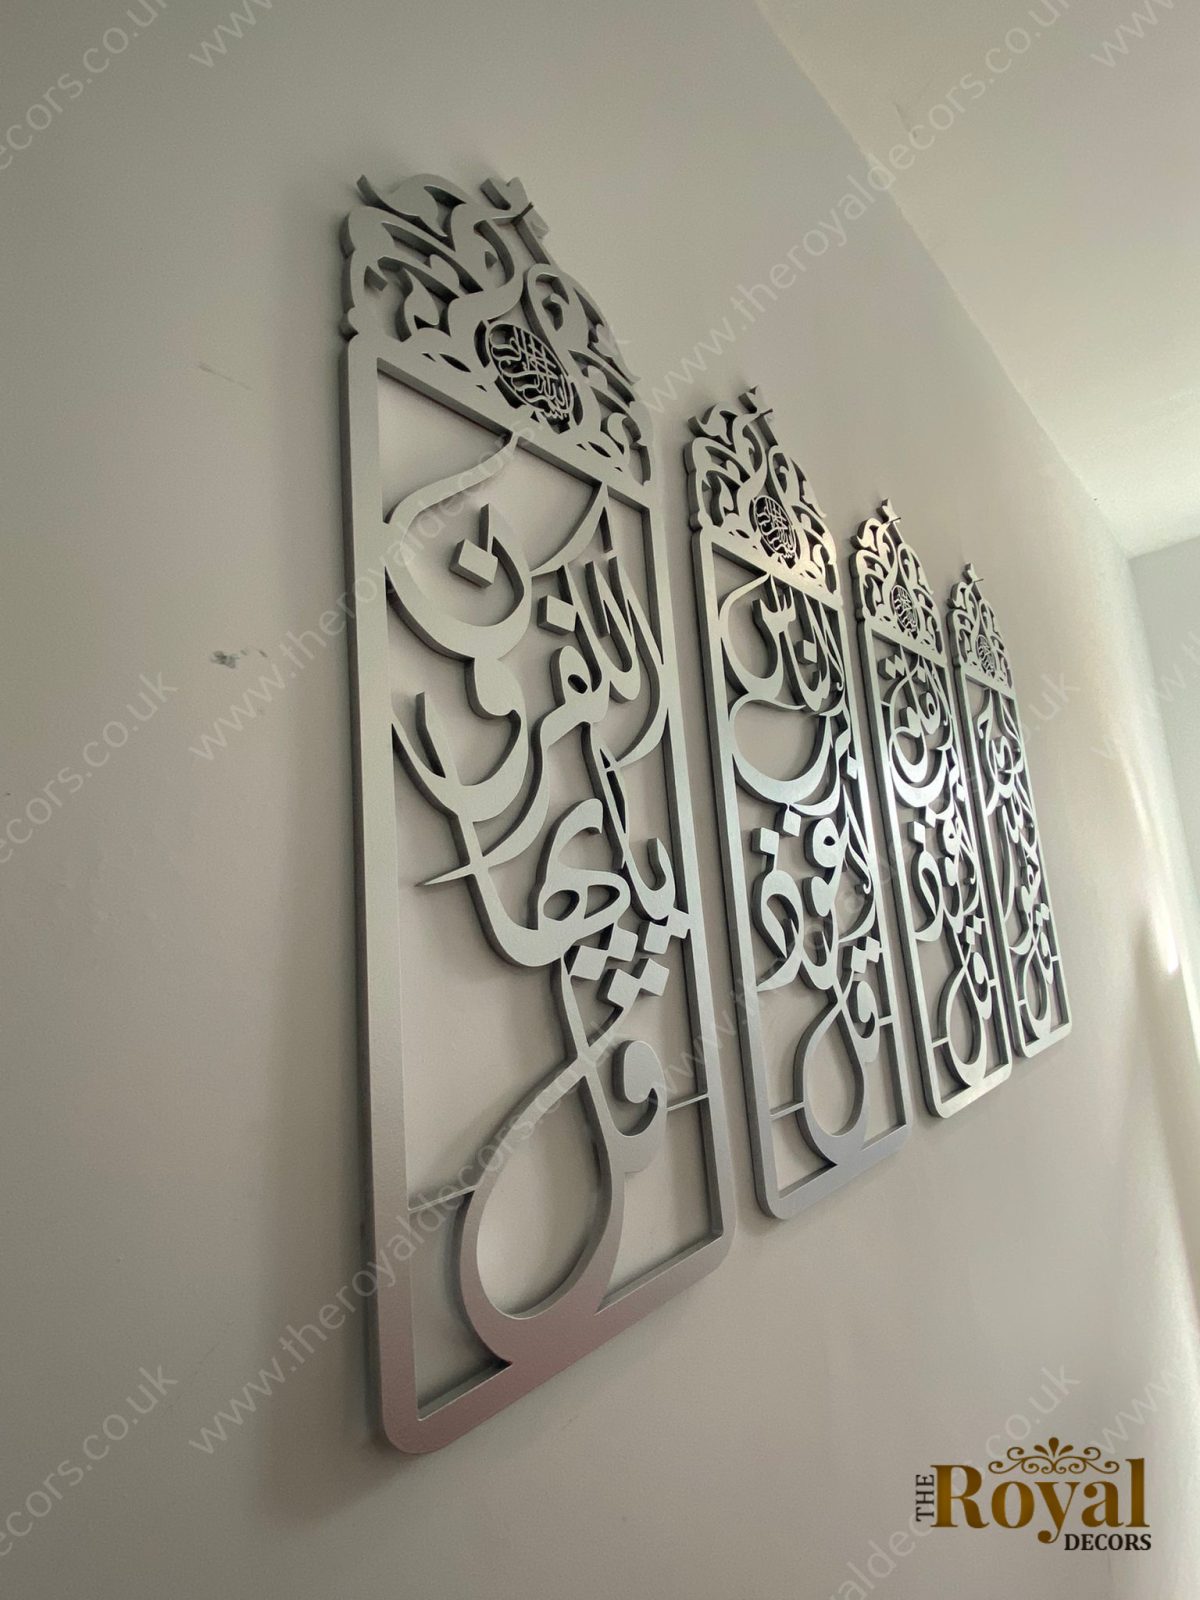 3D 4 Quls wooden Islamic Wall Art Arabic Calligraphy home decor rectangular shape